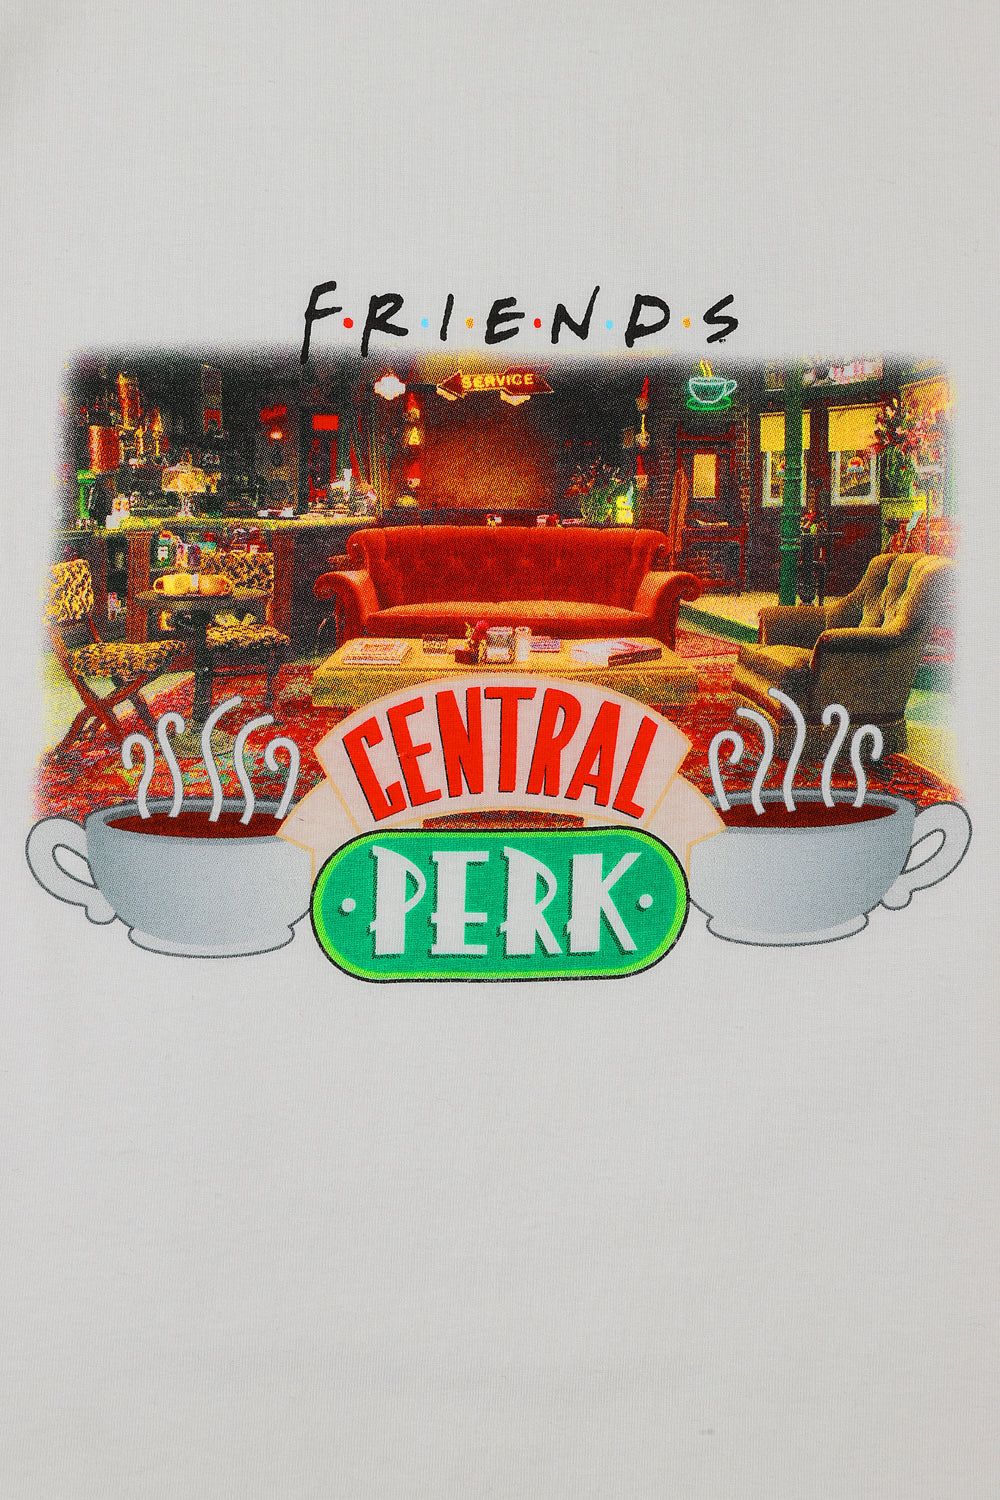 FRIENDS Central Perk Pyjamas for Ladies Cafe TV Show Kids PJ Set Black White - Pyjamas.com